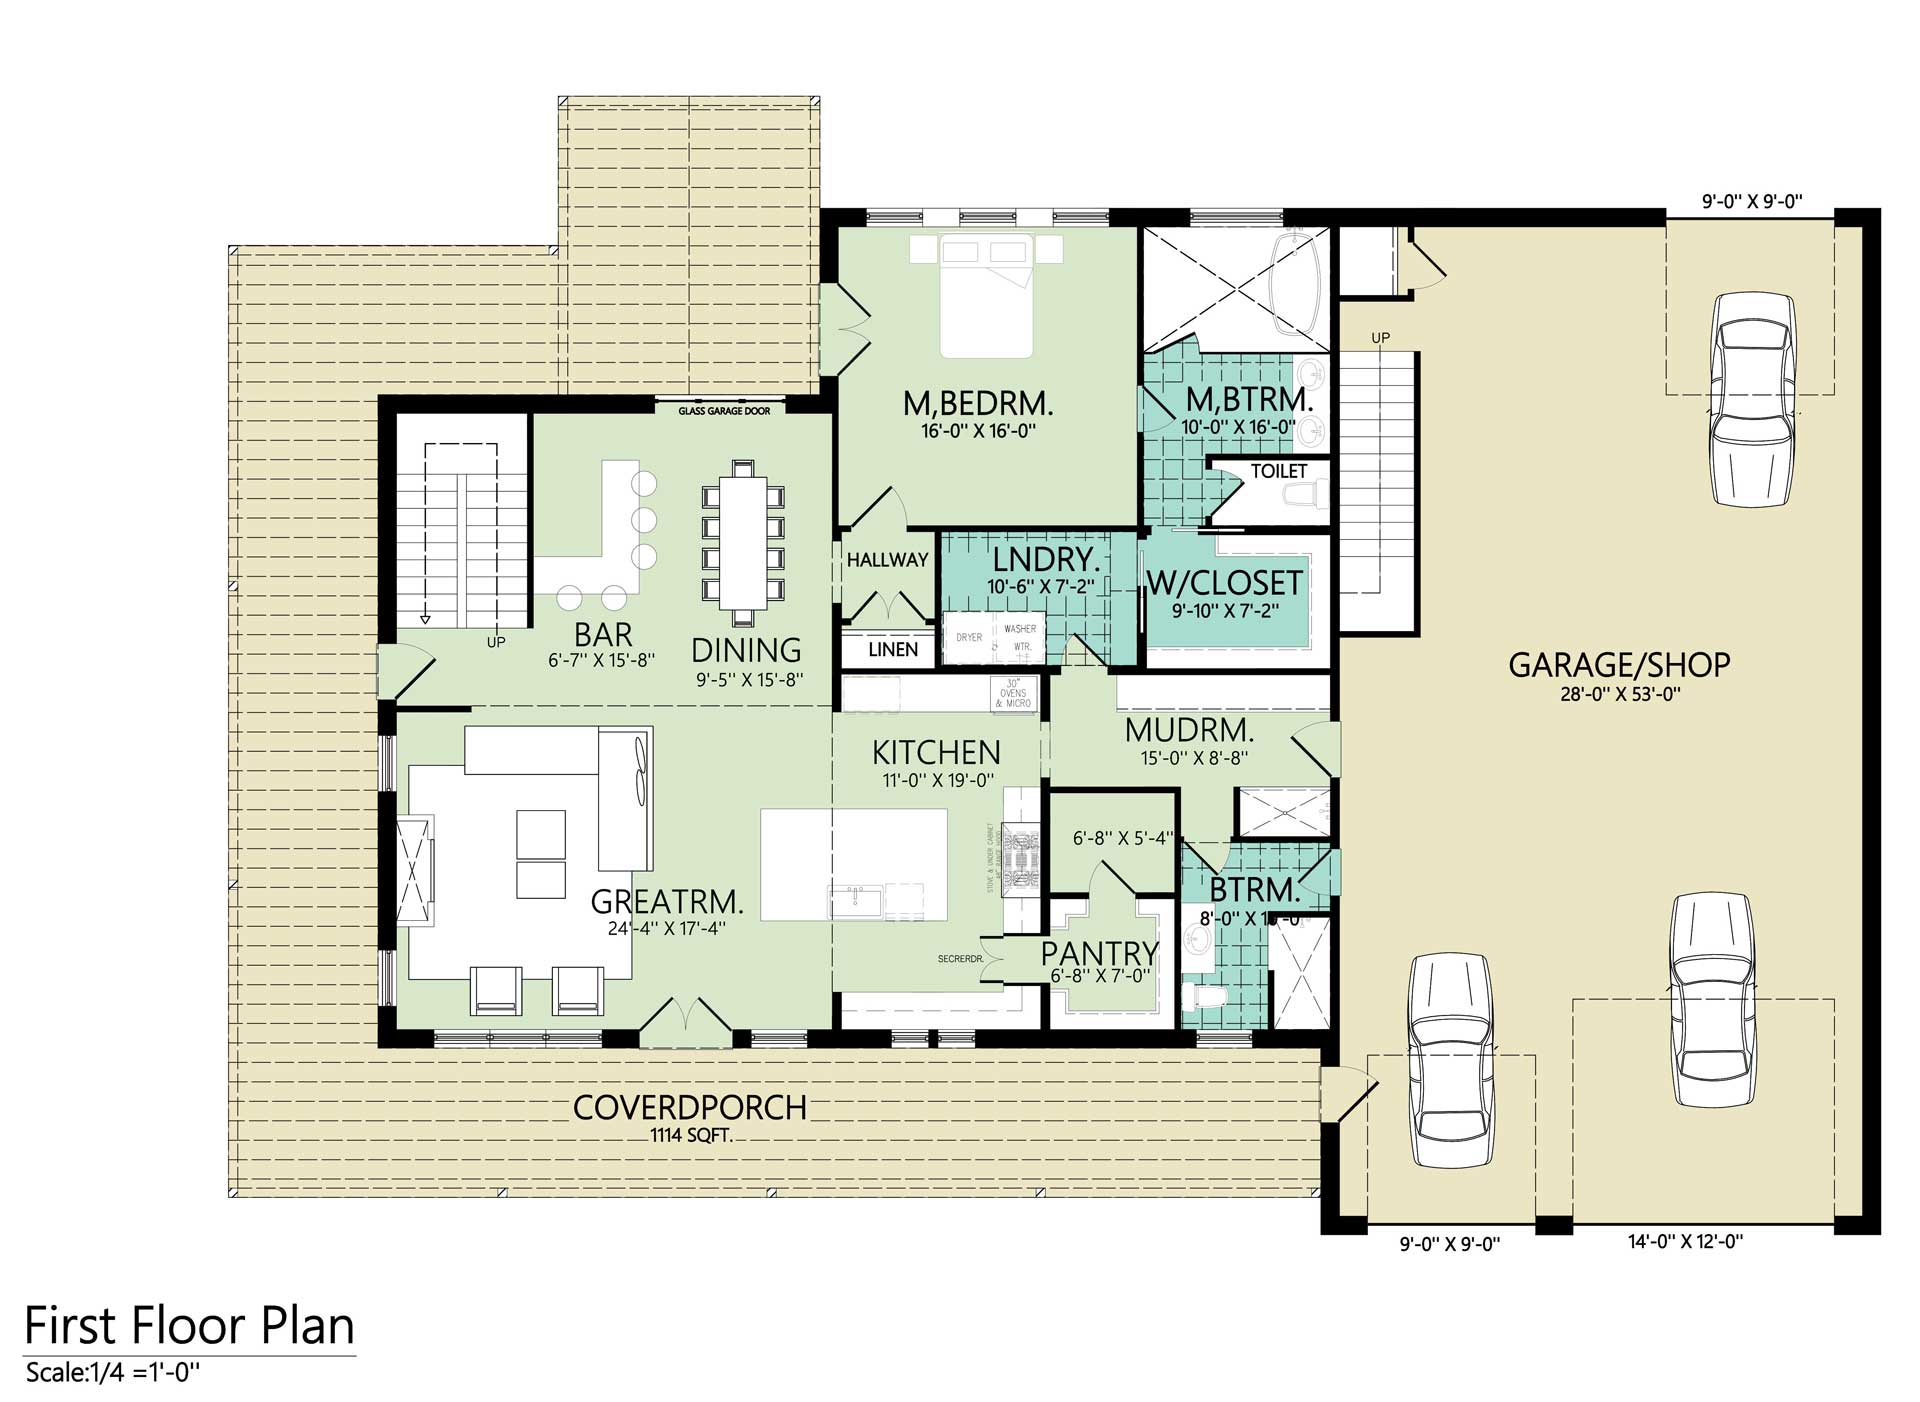 Downstairs Floor Plan layout for Double D barndominium